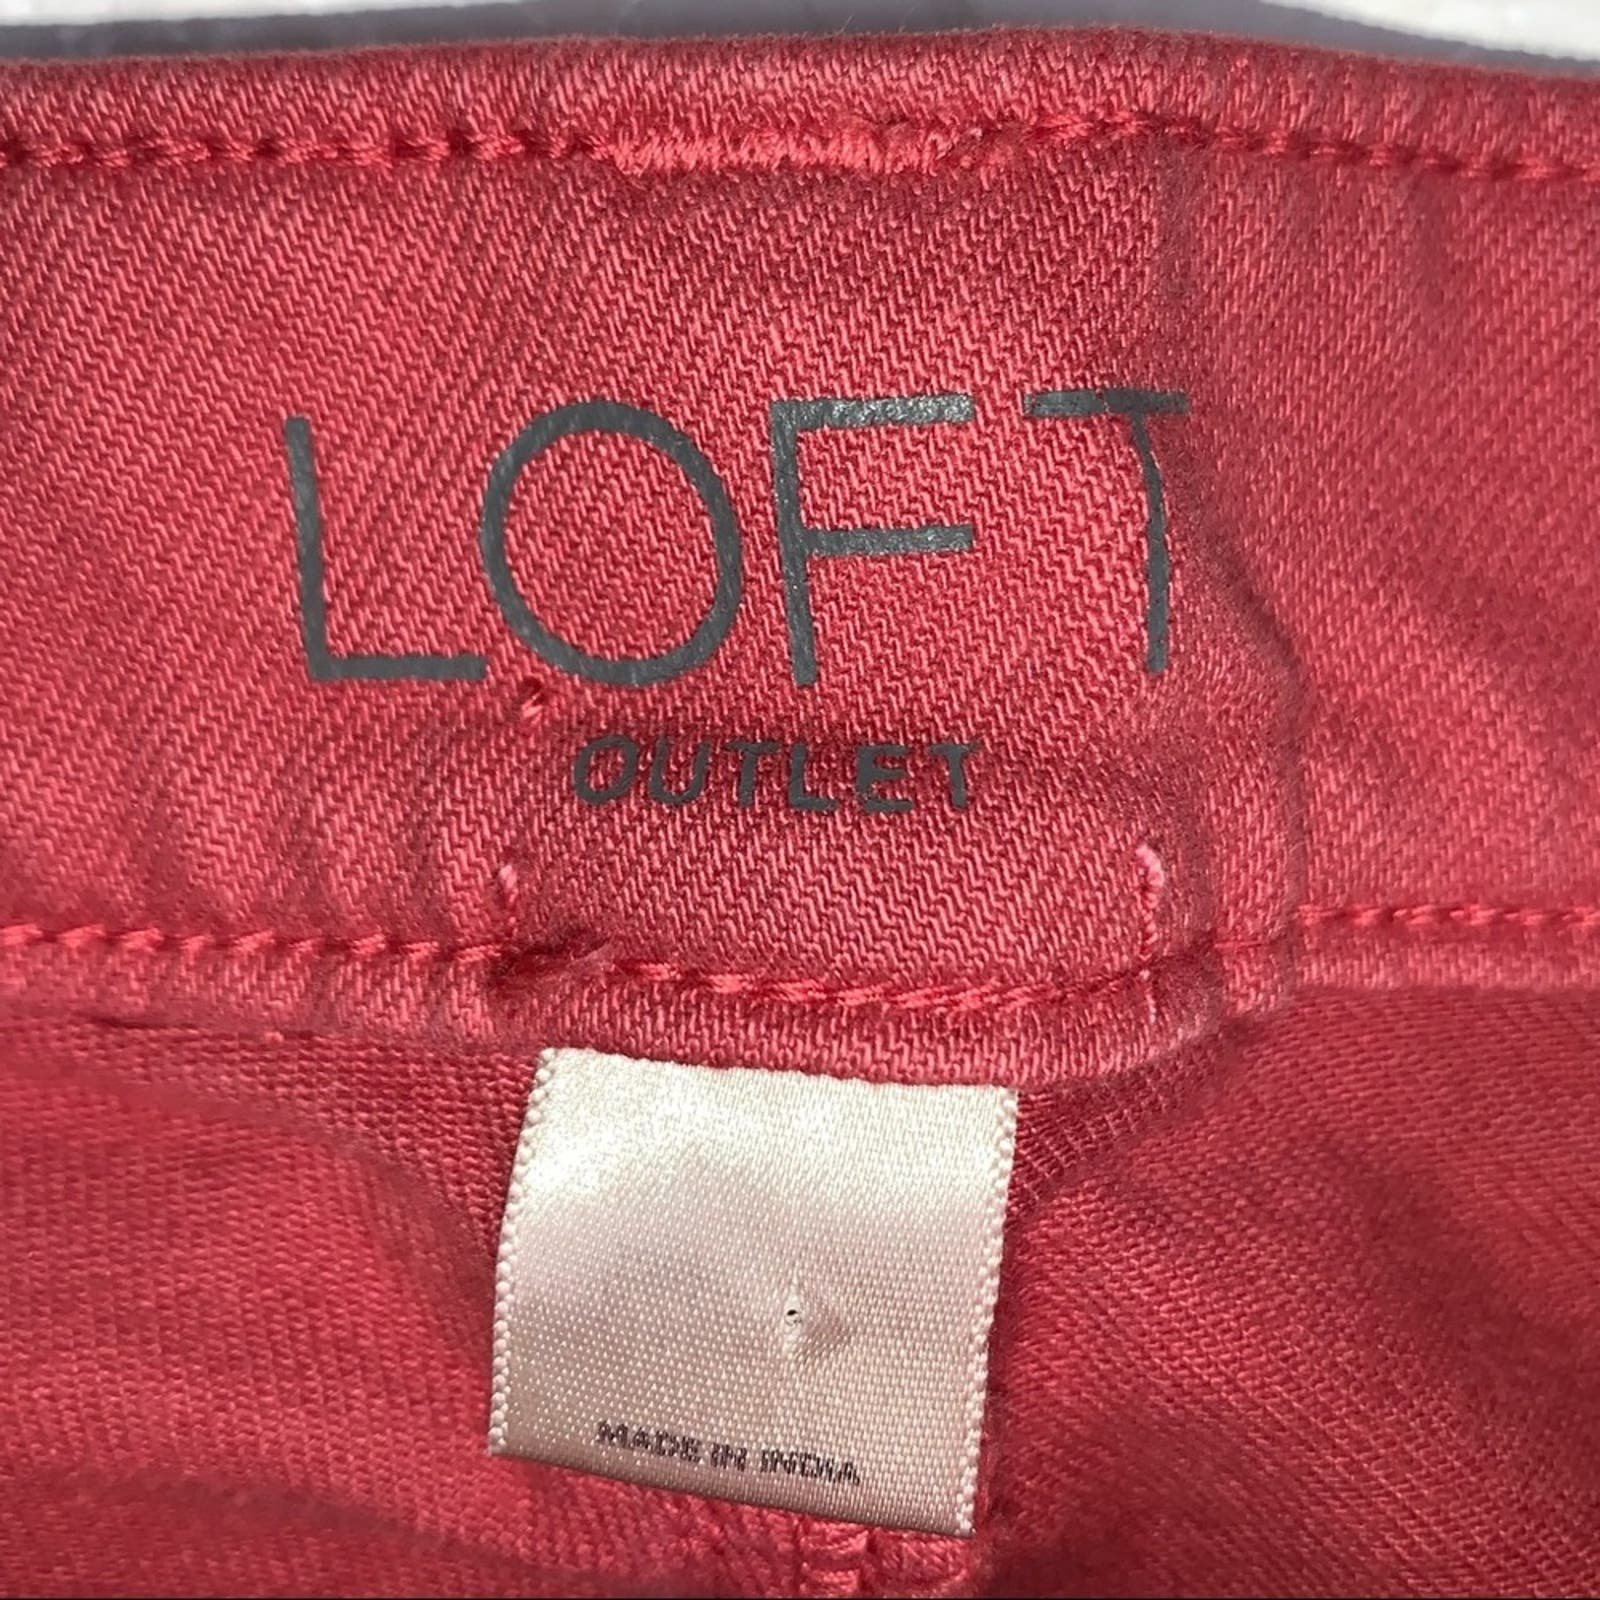 Popular Loft pink modern skinny low rise jeans OiyetxNYG Cool